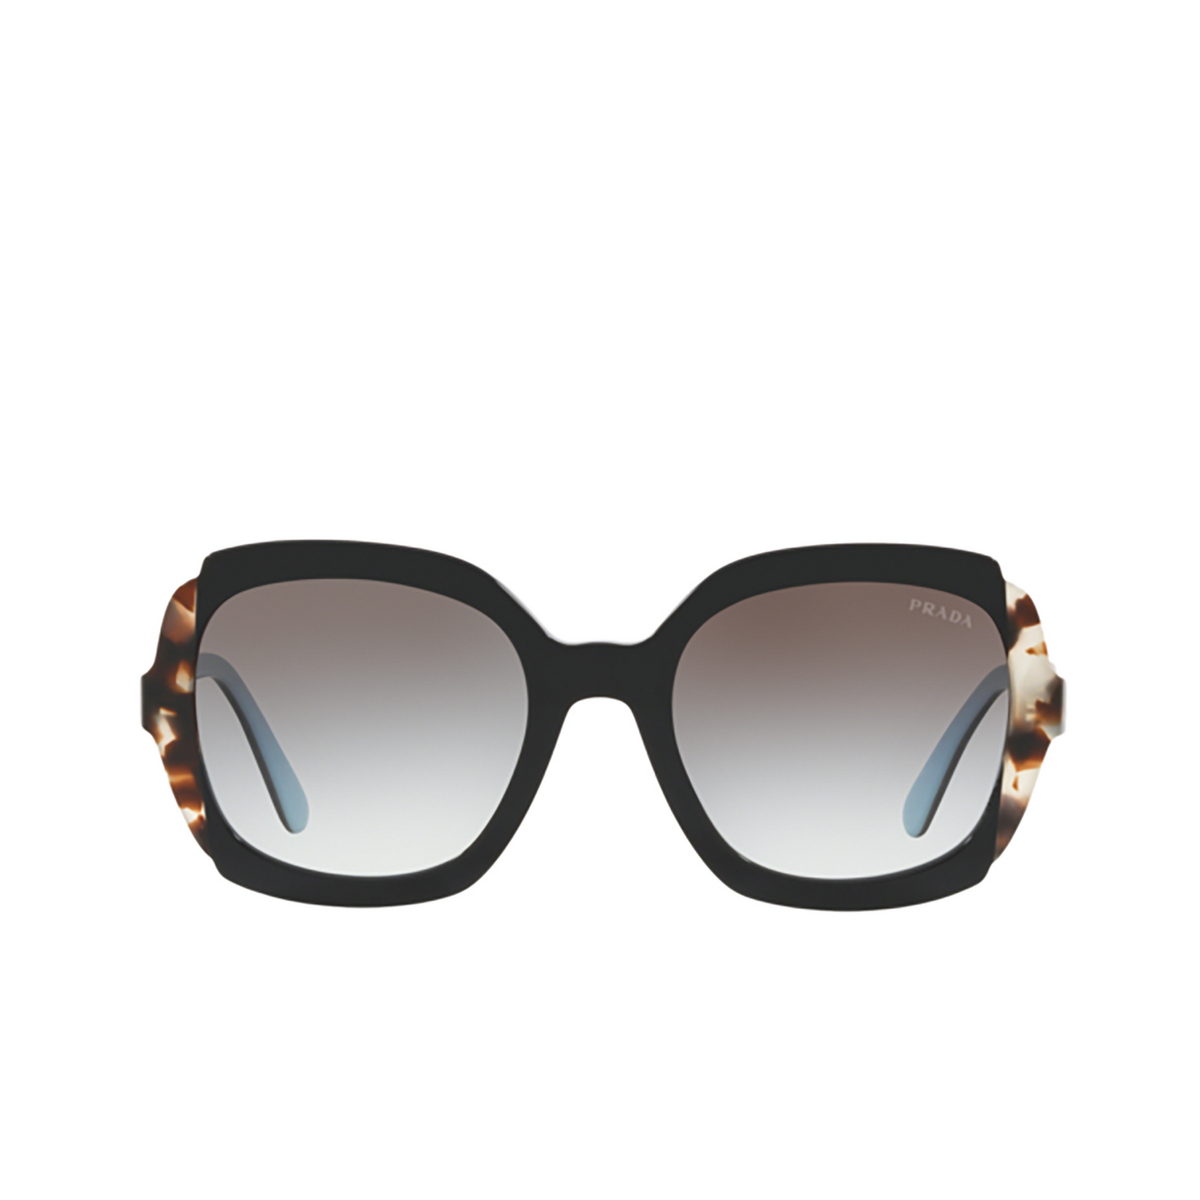 Prada® Square Sunglasses: PR 16US color KHR0A7 Black Azure / Spotted Brown - front view